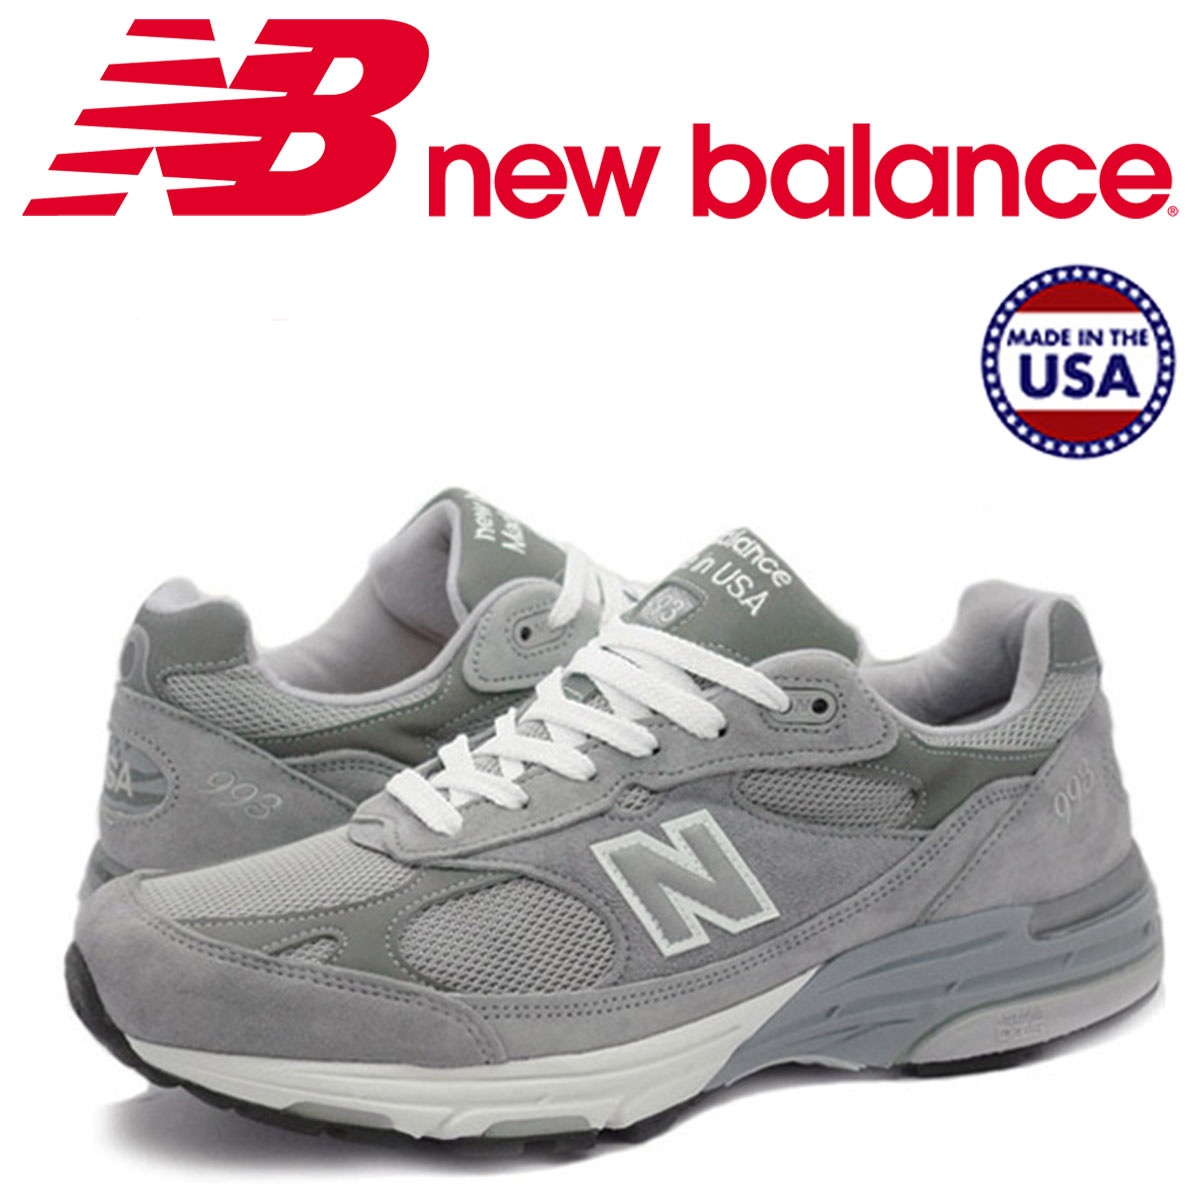 New balance official. New Balance 993. New Balance made in USA 993 mr993gl. Кроссовки New Balance 993. Кроссовки Нью баланс 806.